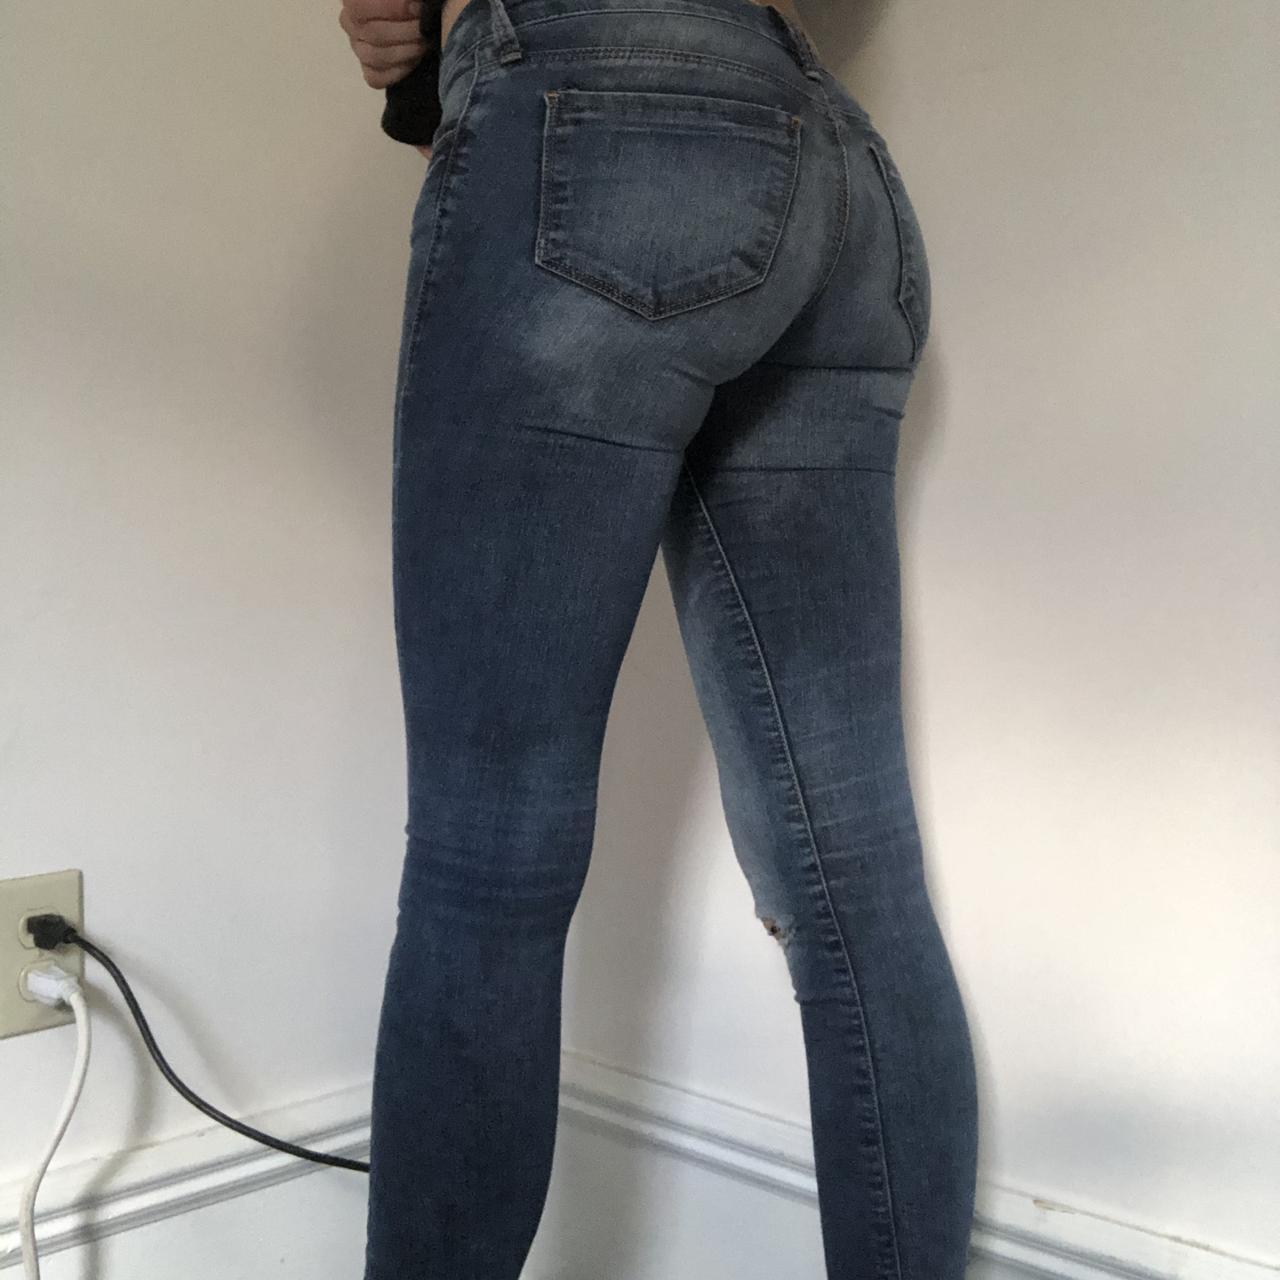 calzedonia jeans push up｜TikTok Search